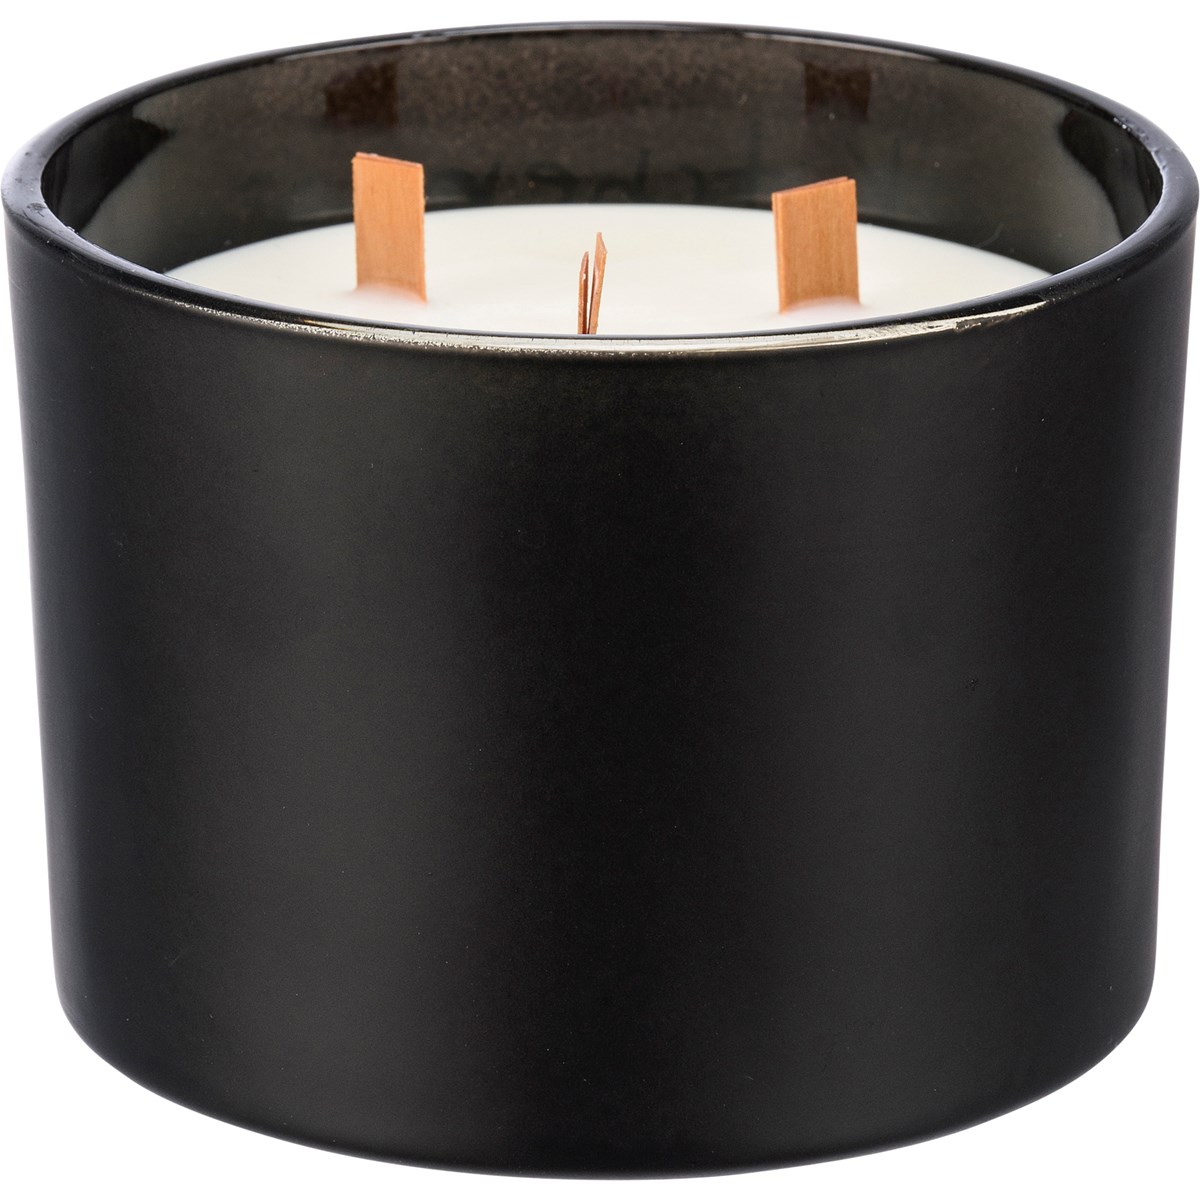 Jar Candle - Kitchen - 14 oz., 4.50" Diameter x 3.25" - Soy Wax, Glass, Wood